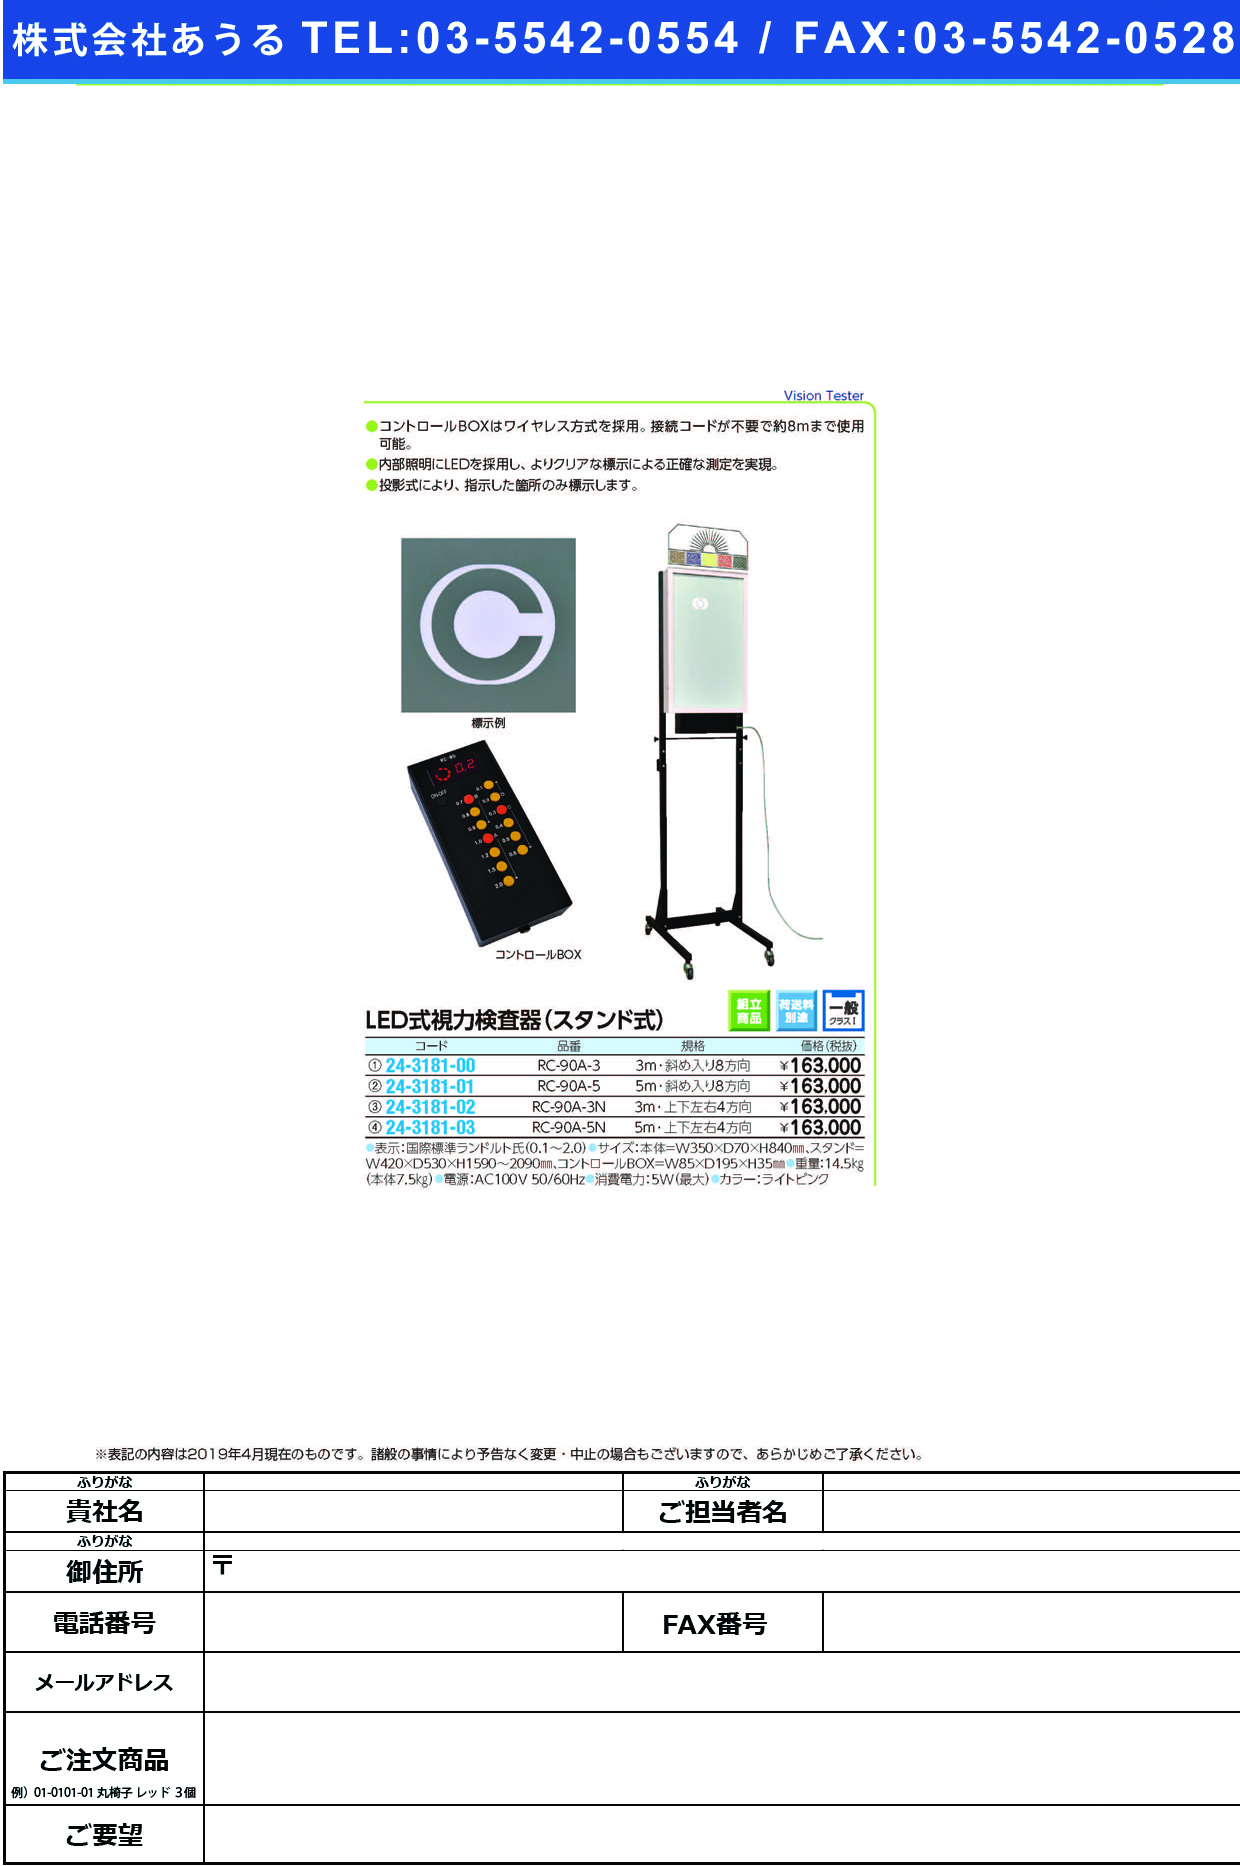 (24-3181-01)ＬＥＤ式視力検査器（スタンド式５ｍ用 RC-90A-5(8ﾎｳｺｳ) LEDｼｷｼﾘｮｸｹﾝｻｷｽﾀﾝﾄﾞｼｷ【1台単位】【2019年カタログ商品】